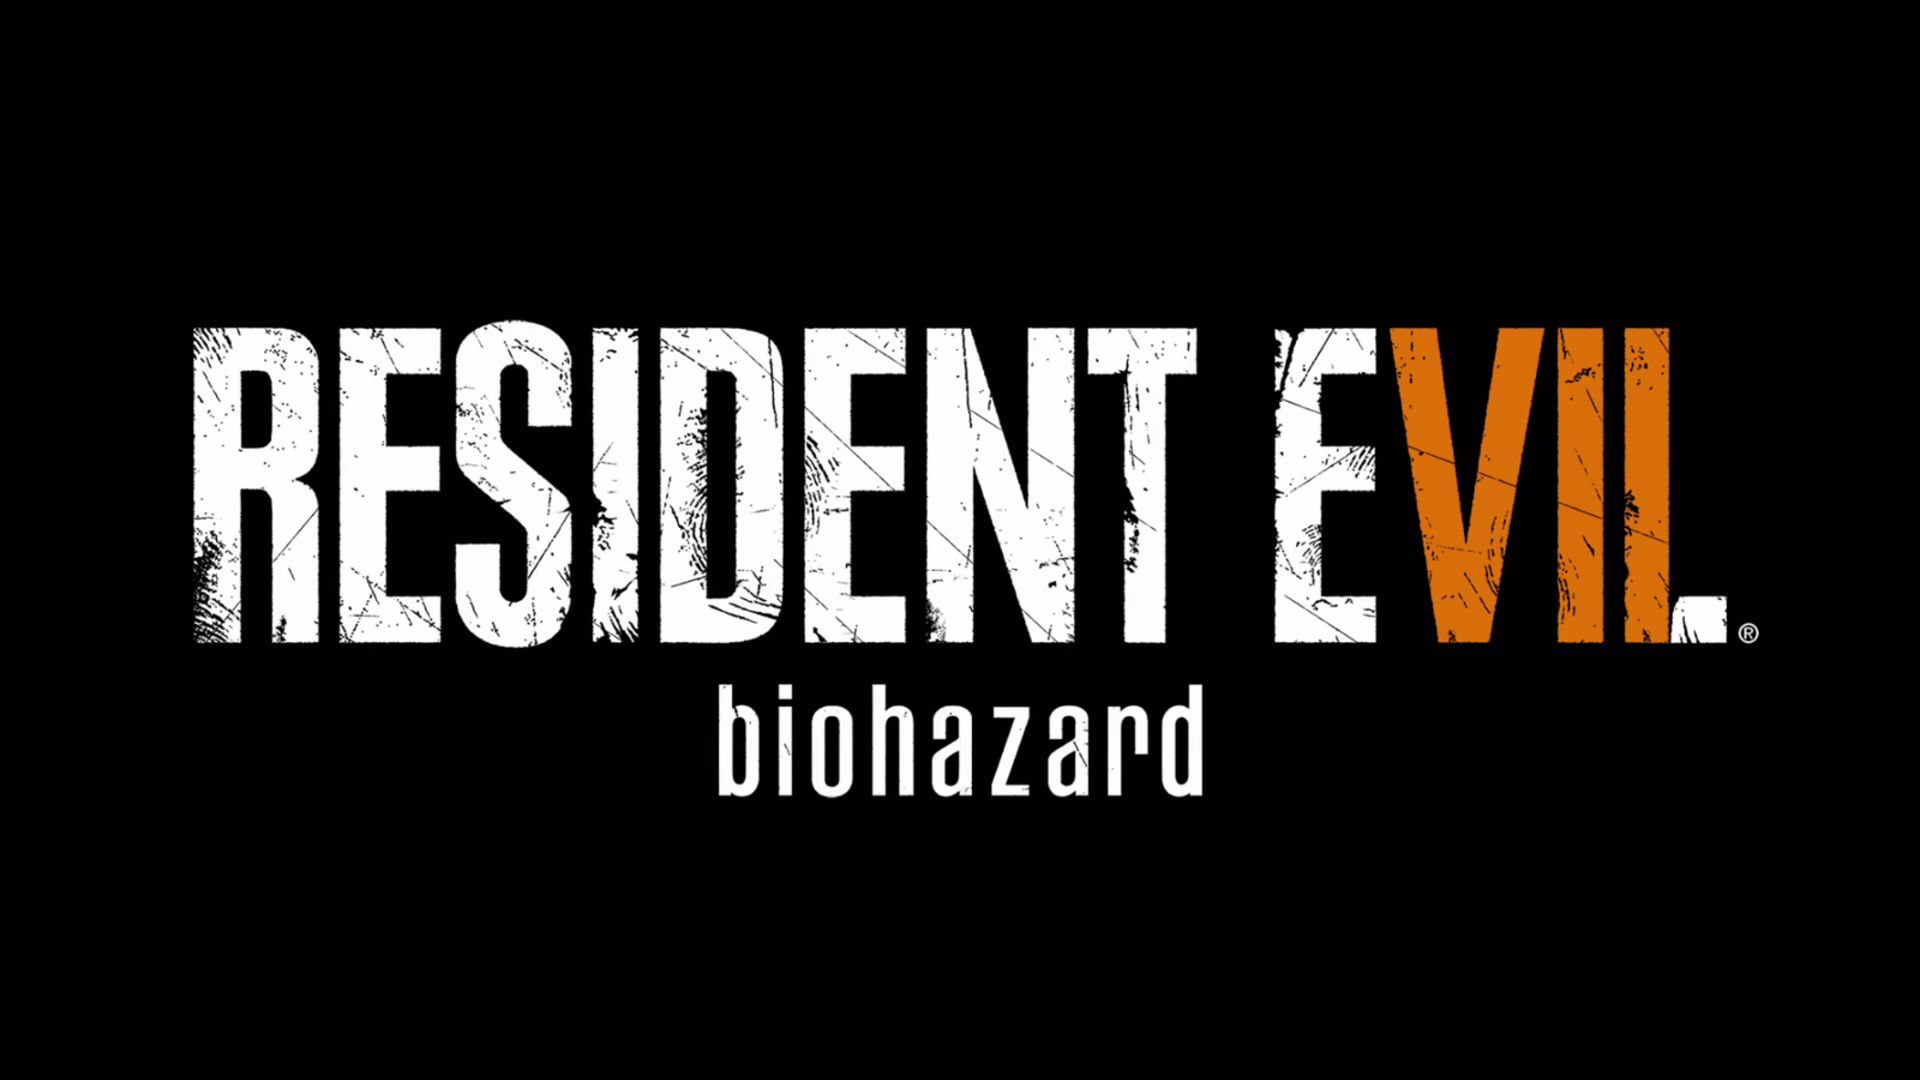 Video Game Resident Evil 7: Biohazard HD Wallpaper | Background Image